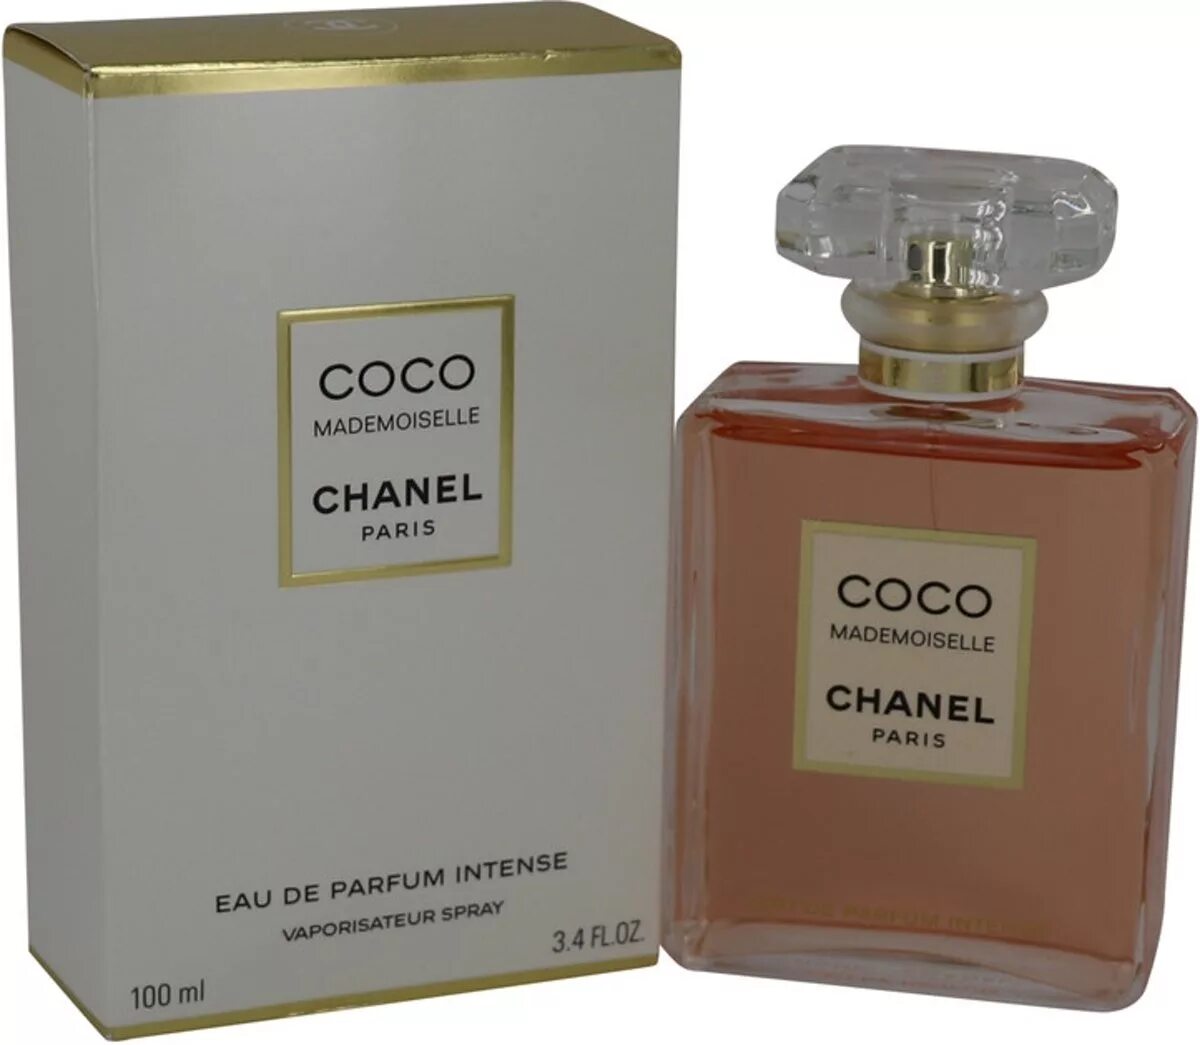 Chanel Mademoiselle 100 ml. Chanel Coco Mademoiselle intense EDP 100 ml. Coco Mademoiselle Chanel, 100ml, EDP. Chanel Coco Mademoiselle Eau de Parfum 100 ml (woman).